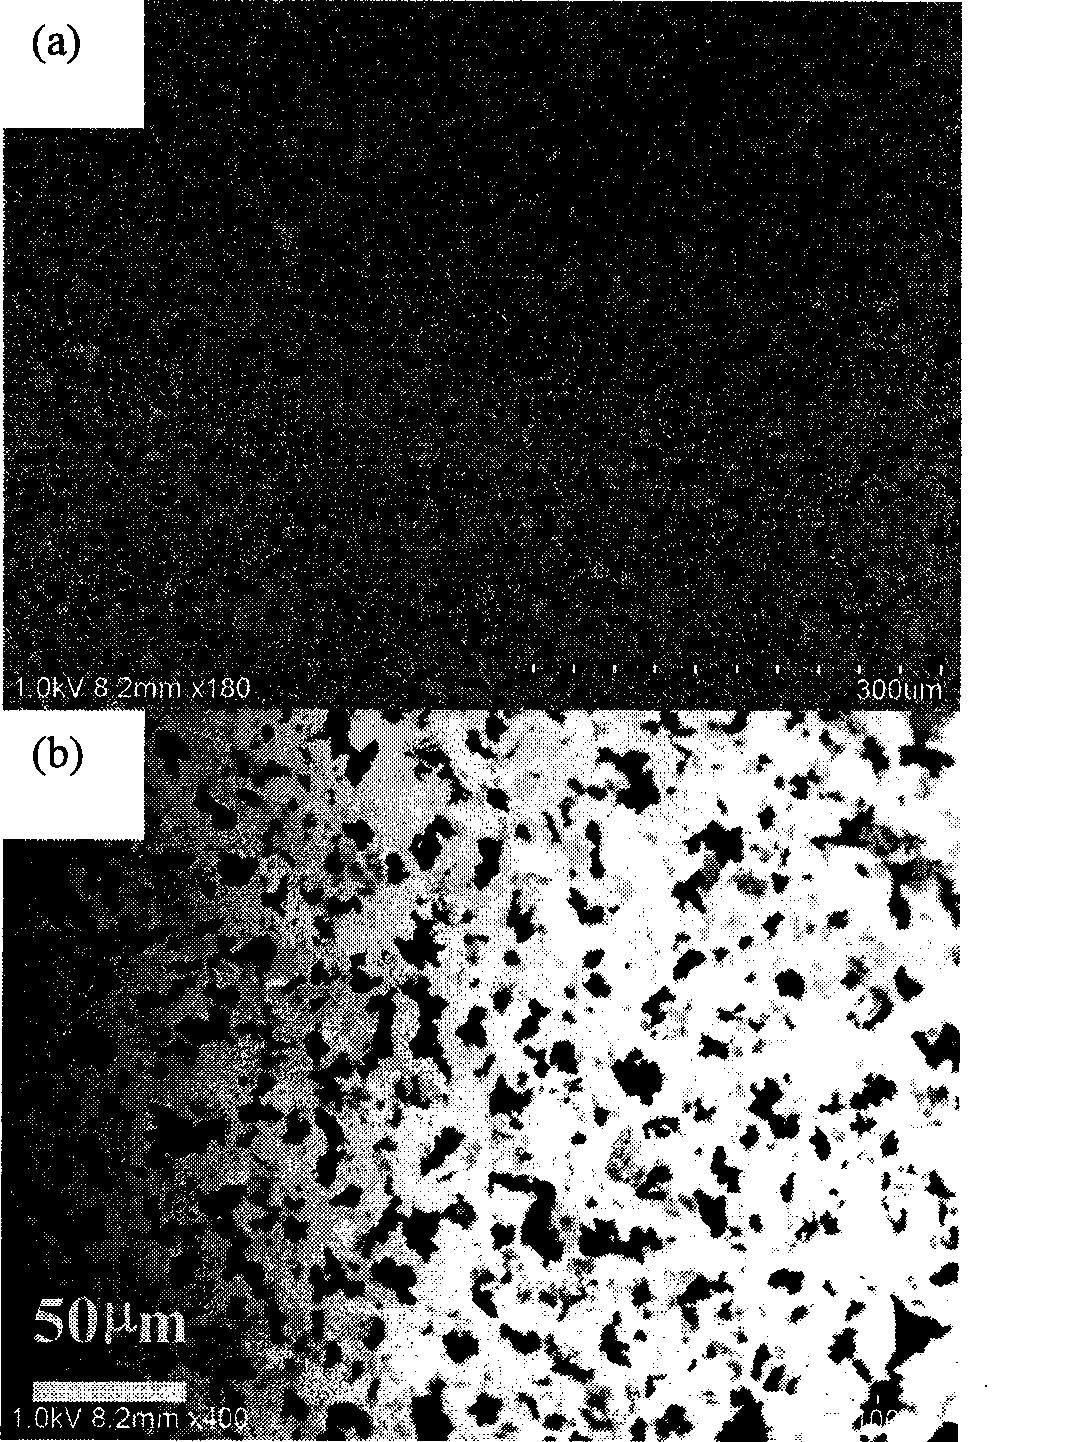 Method for cutting graphite alkene by titanium dioxide photocatalysis